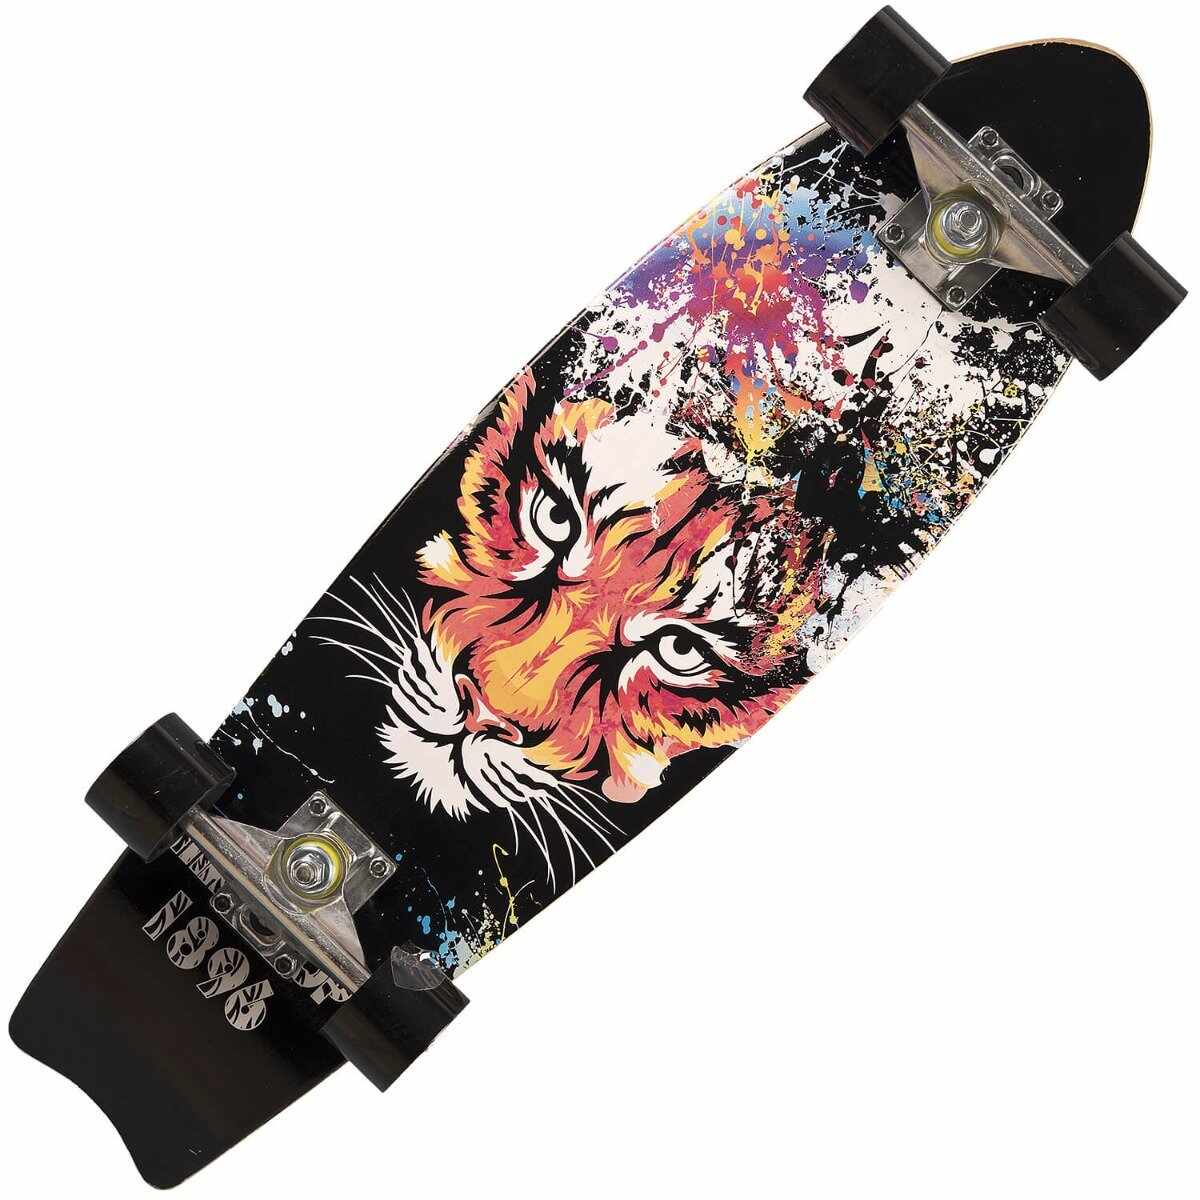 Skateboard Action One, Aluminiu, 70 x 29 cm, Multicolor, Just a cat